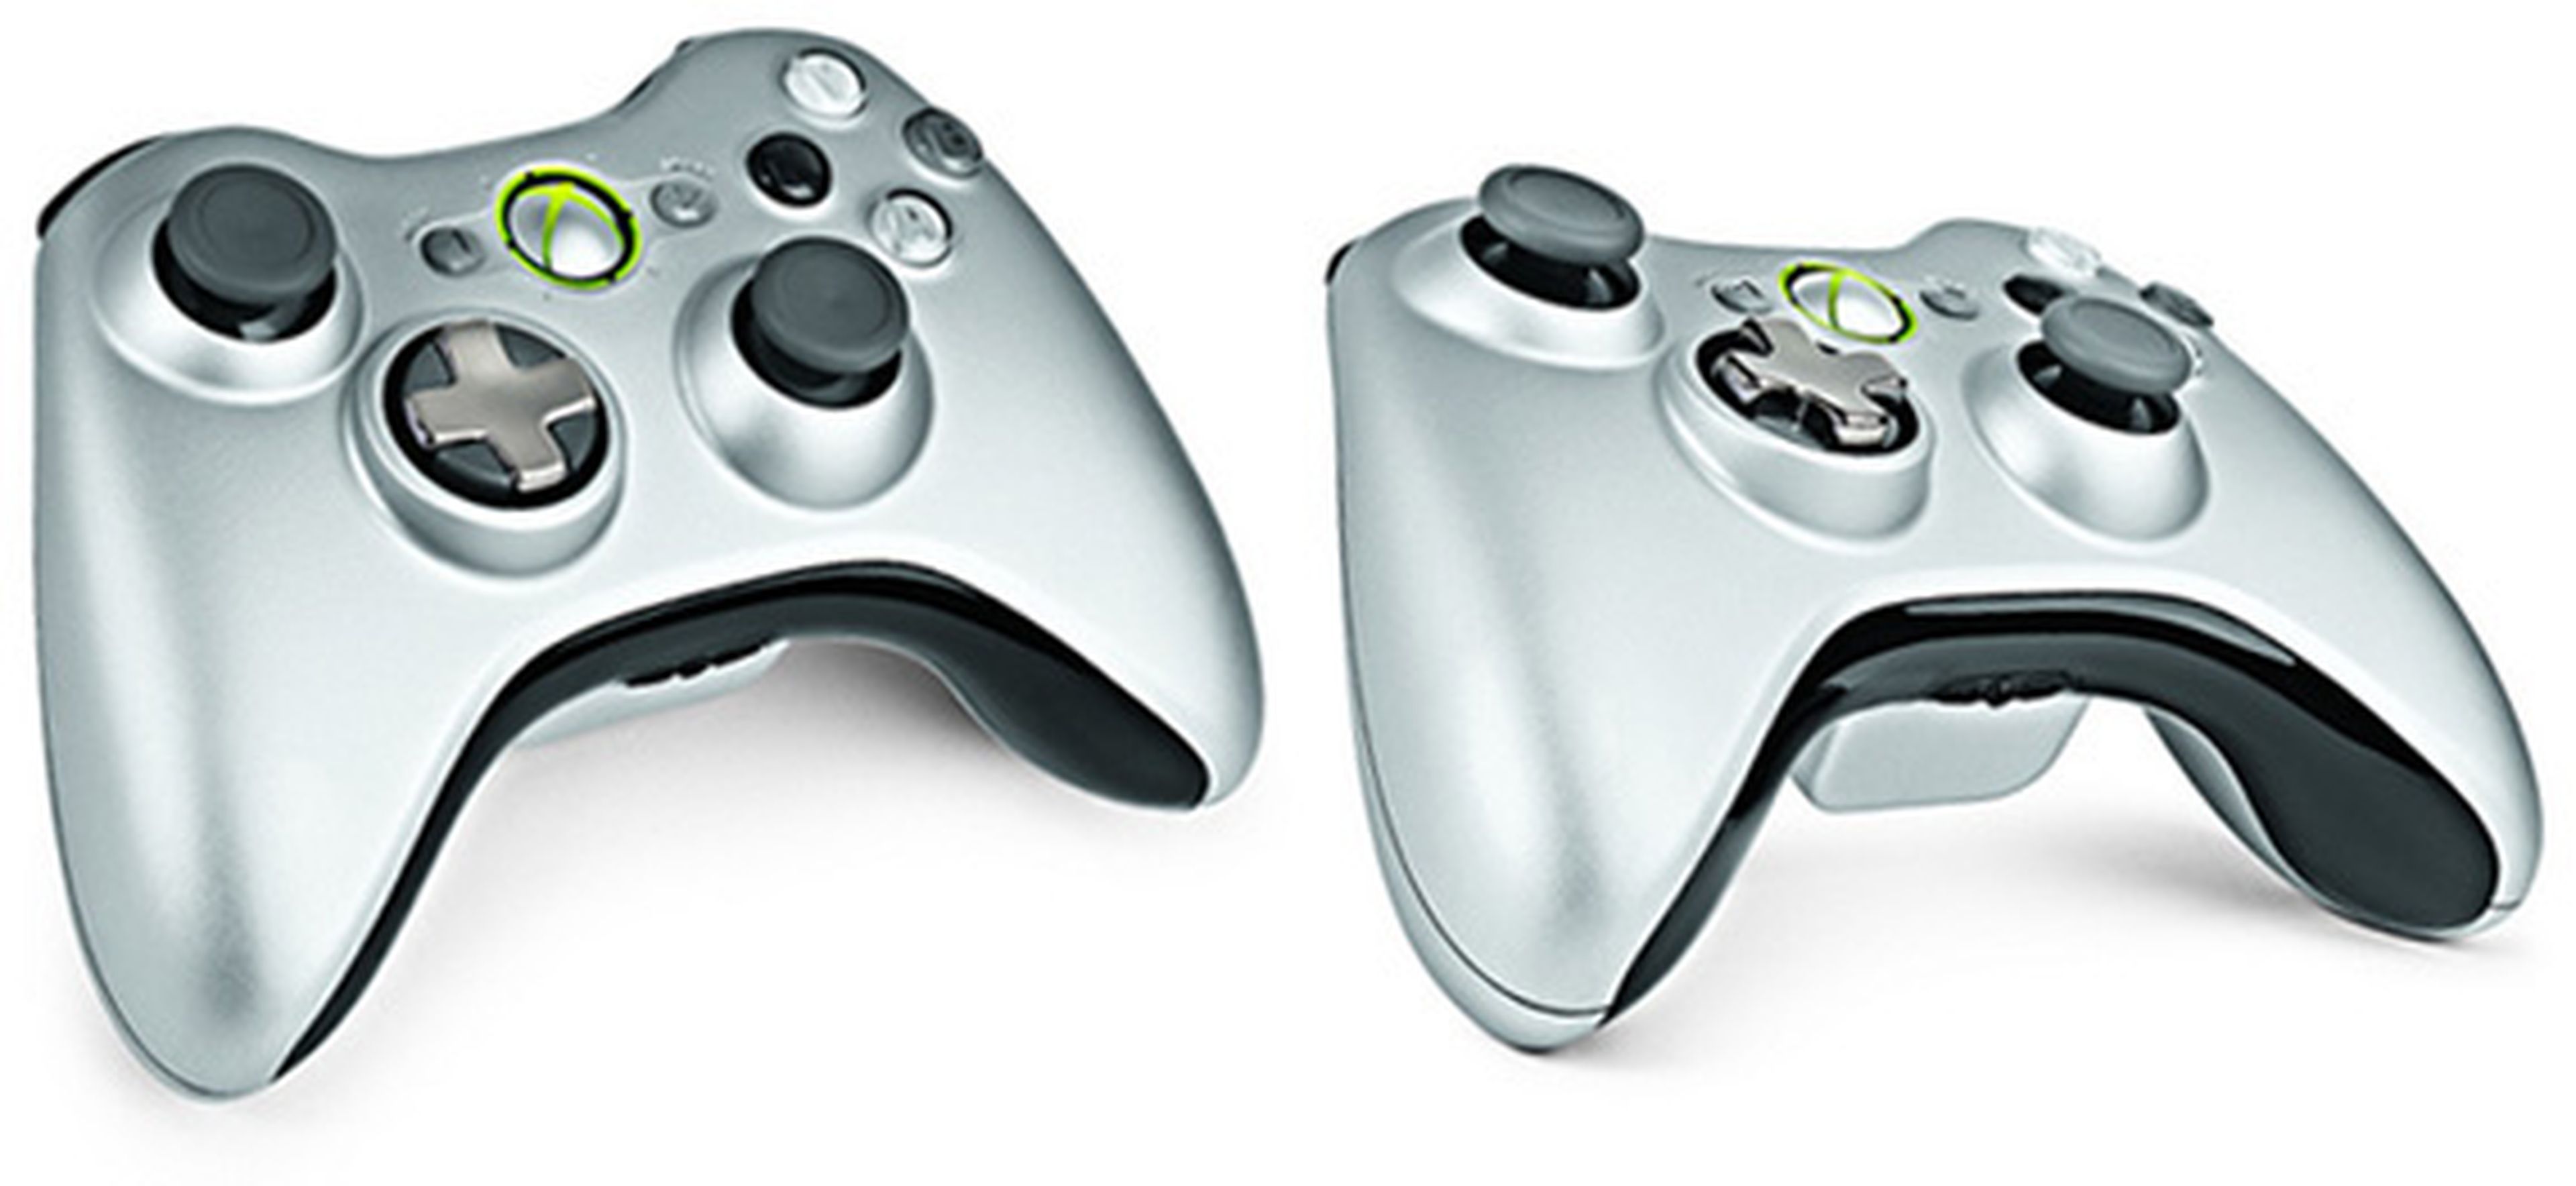 ¿Xbox 360 tendrá nuevo mando?